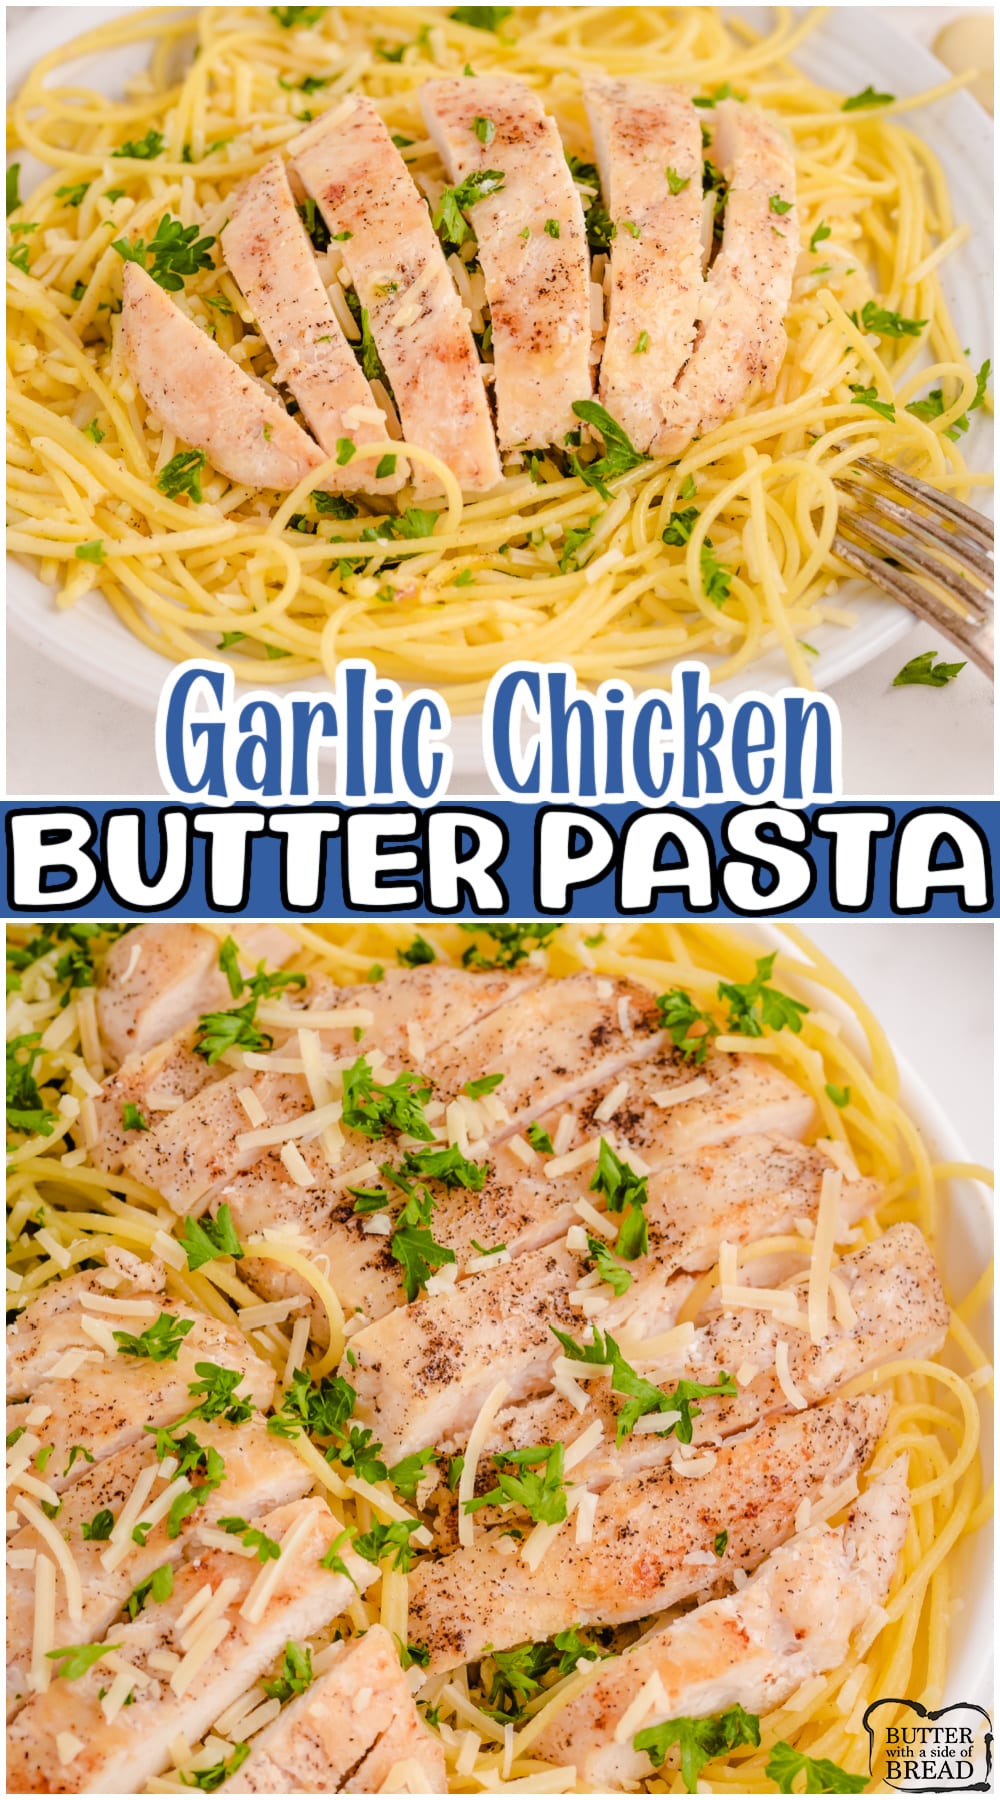 Chicken Garlic Butter Pasta packed with garlic, parmesan cheese, pasta & tender chicken. Simple, flavorful chicken dinner recipe that is quick & easy to make!